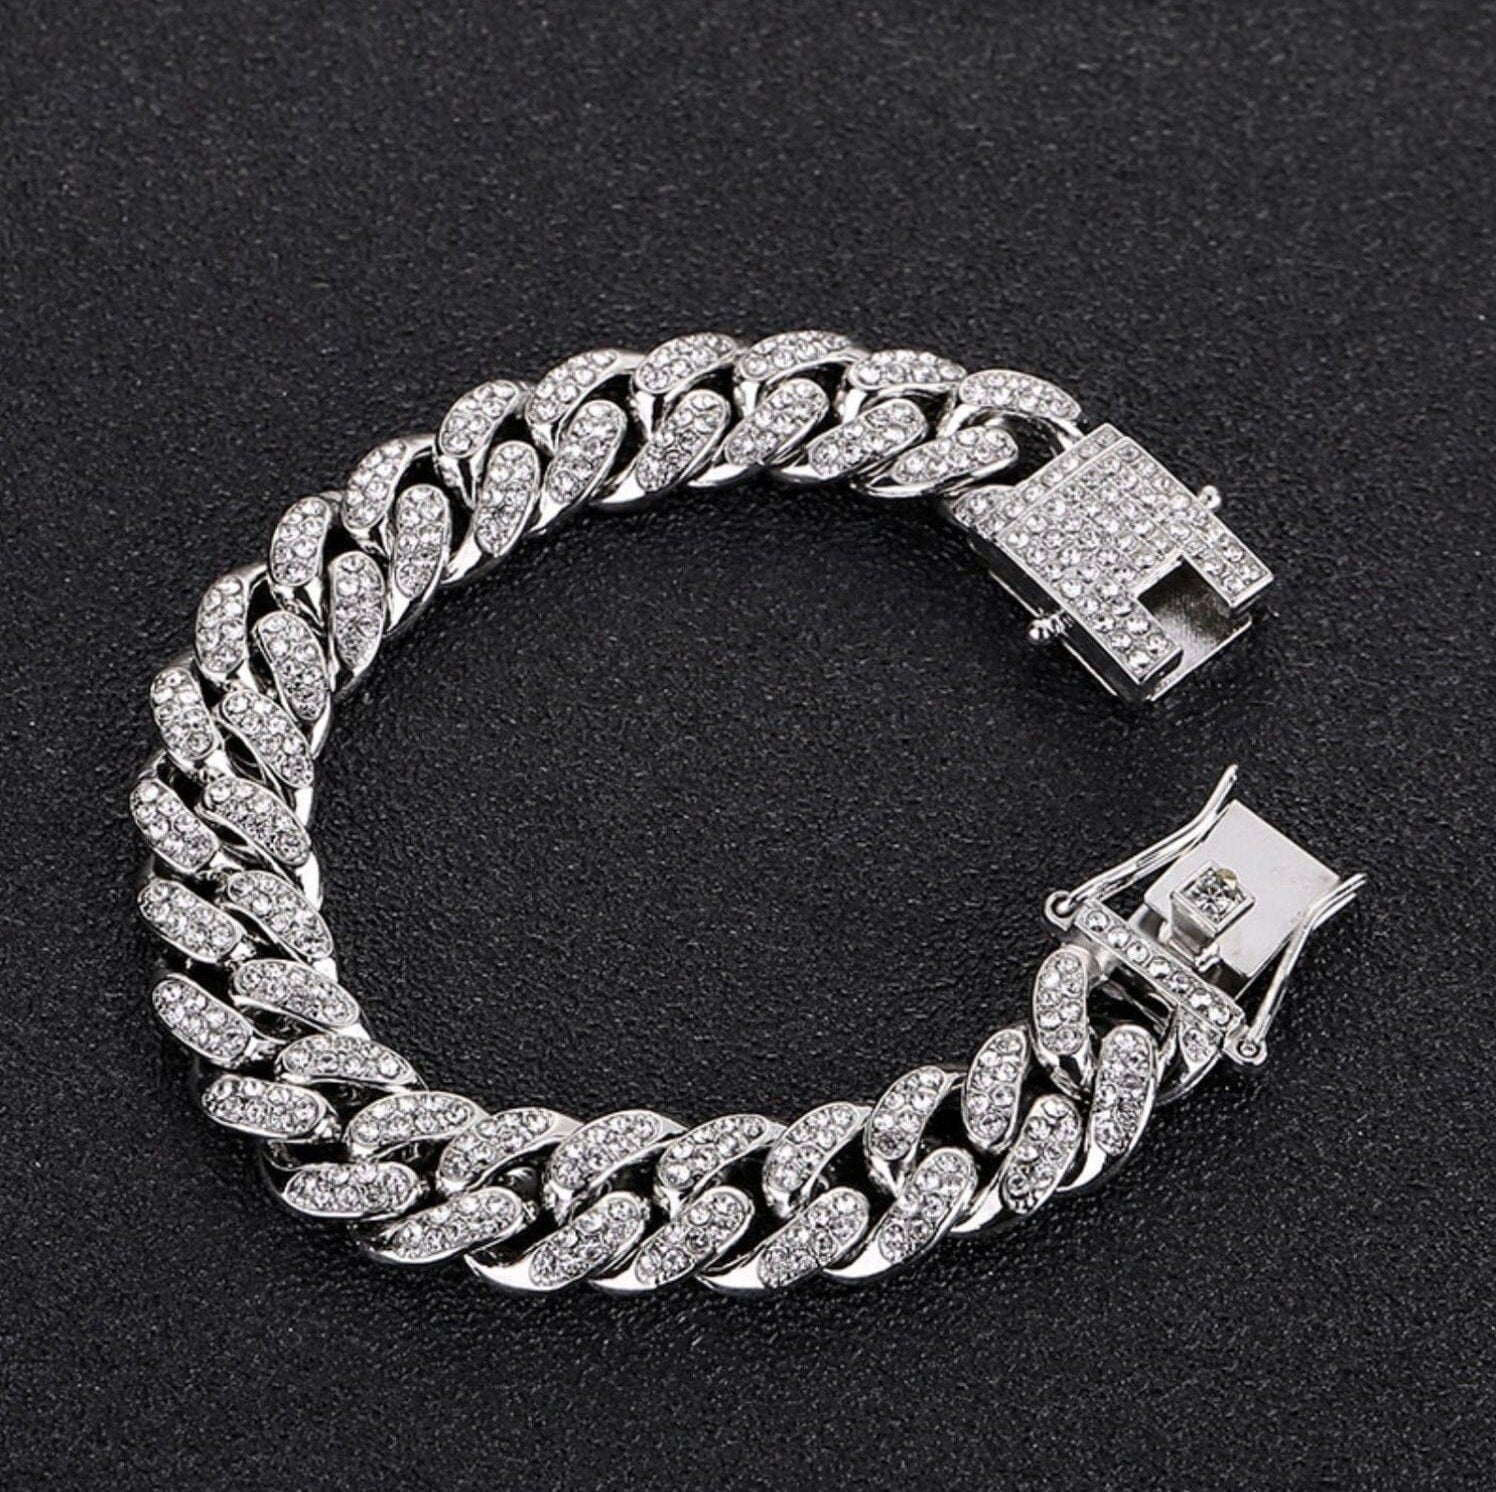 Silver Iced Diamond Miami Cuban Link Chain Bracelet 12MM - 8IN White Gold - Men's Jewelry - Womens Jewelry - VVS Cubic Zirconia